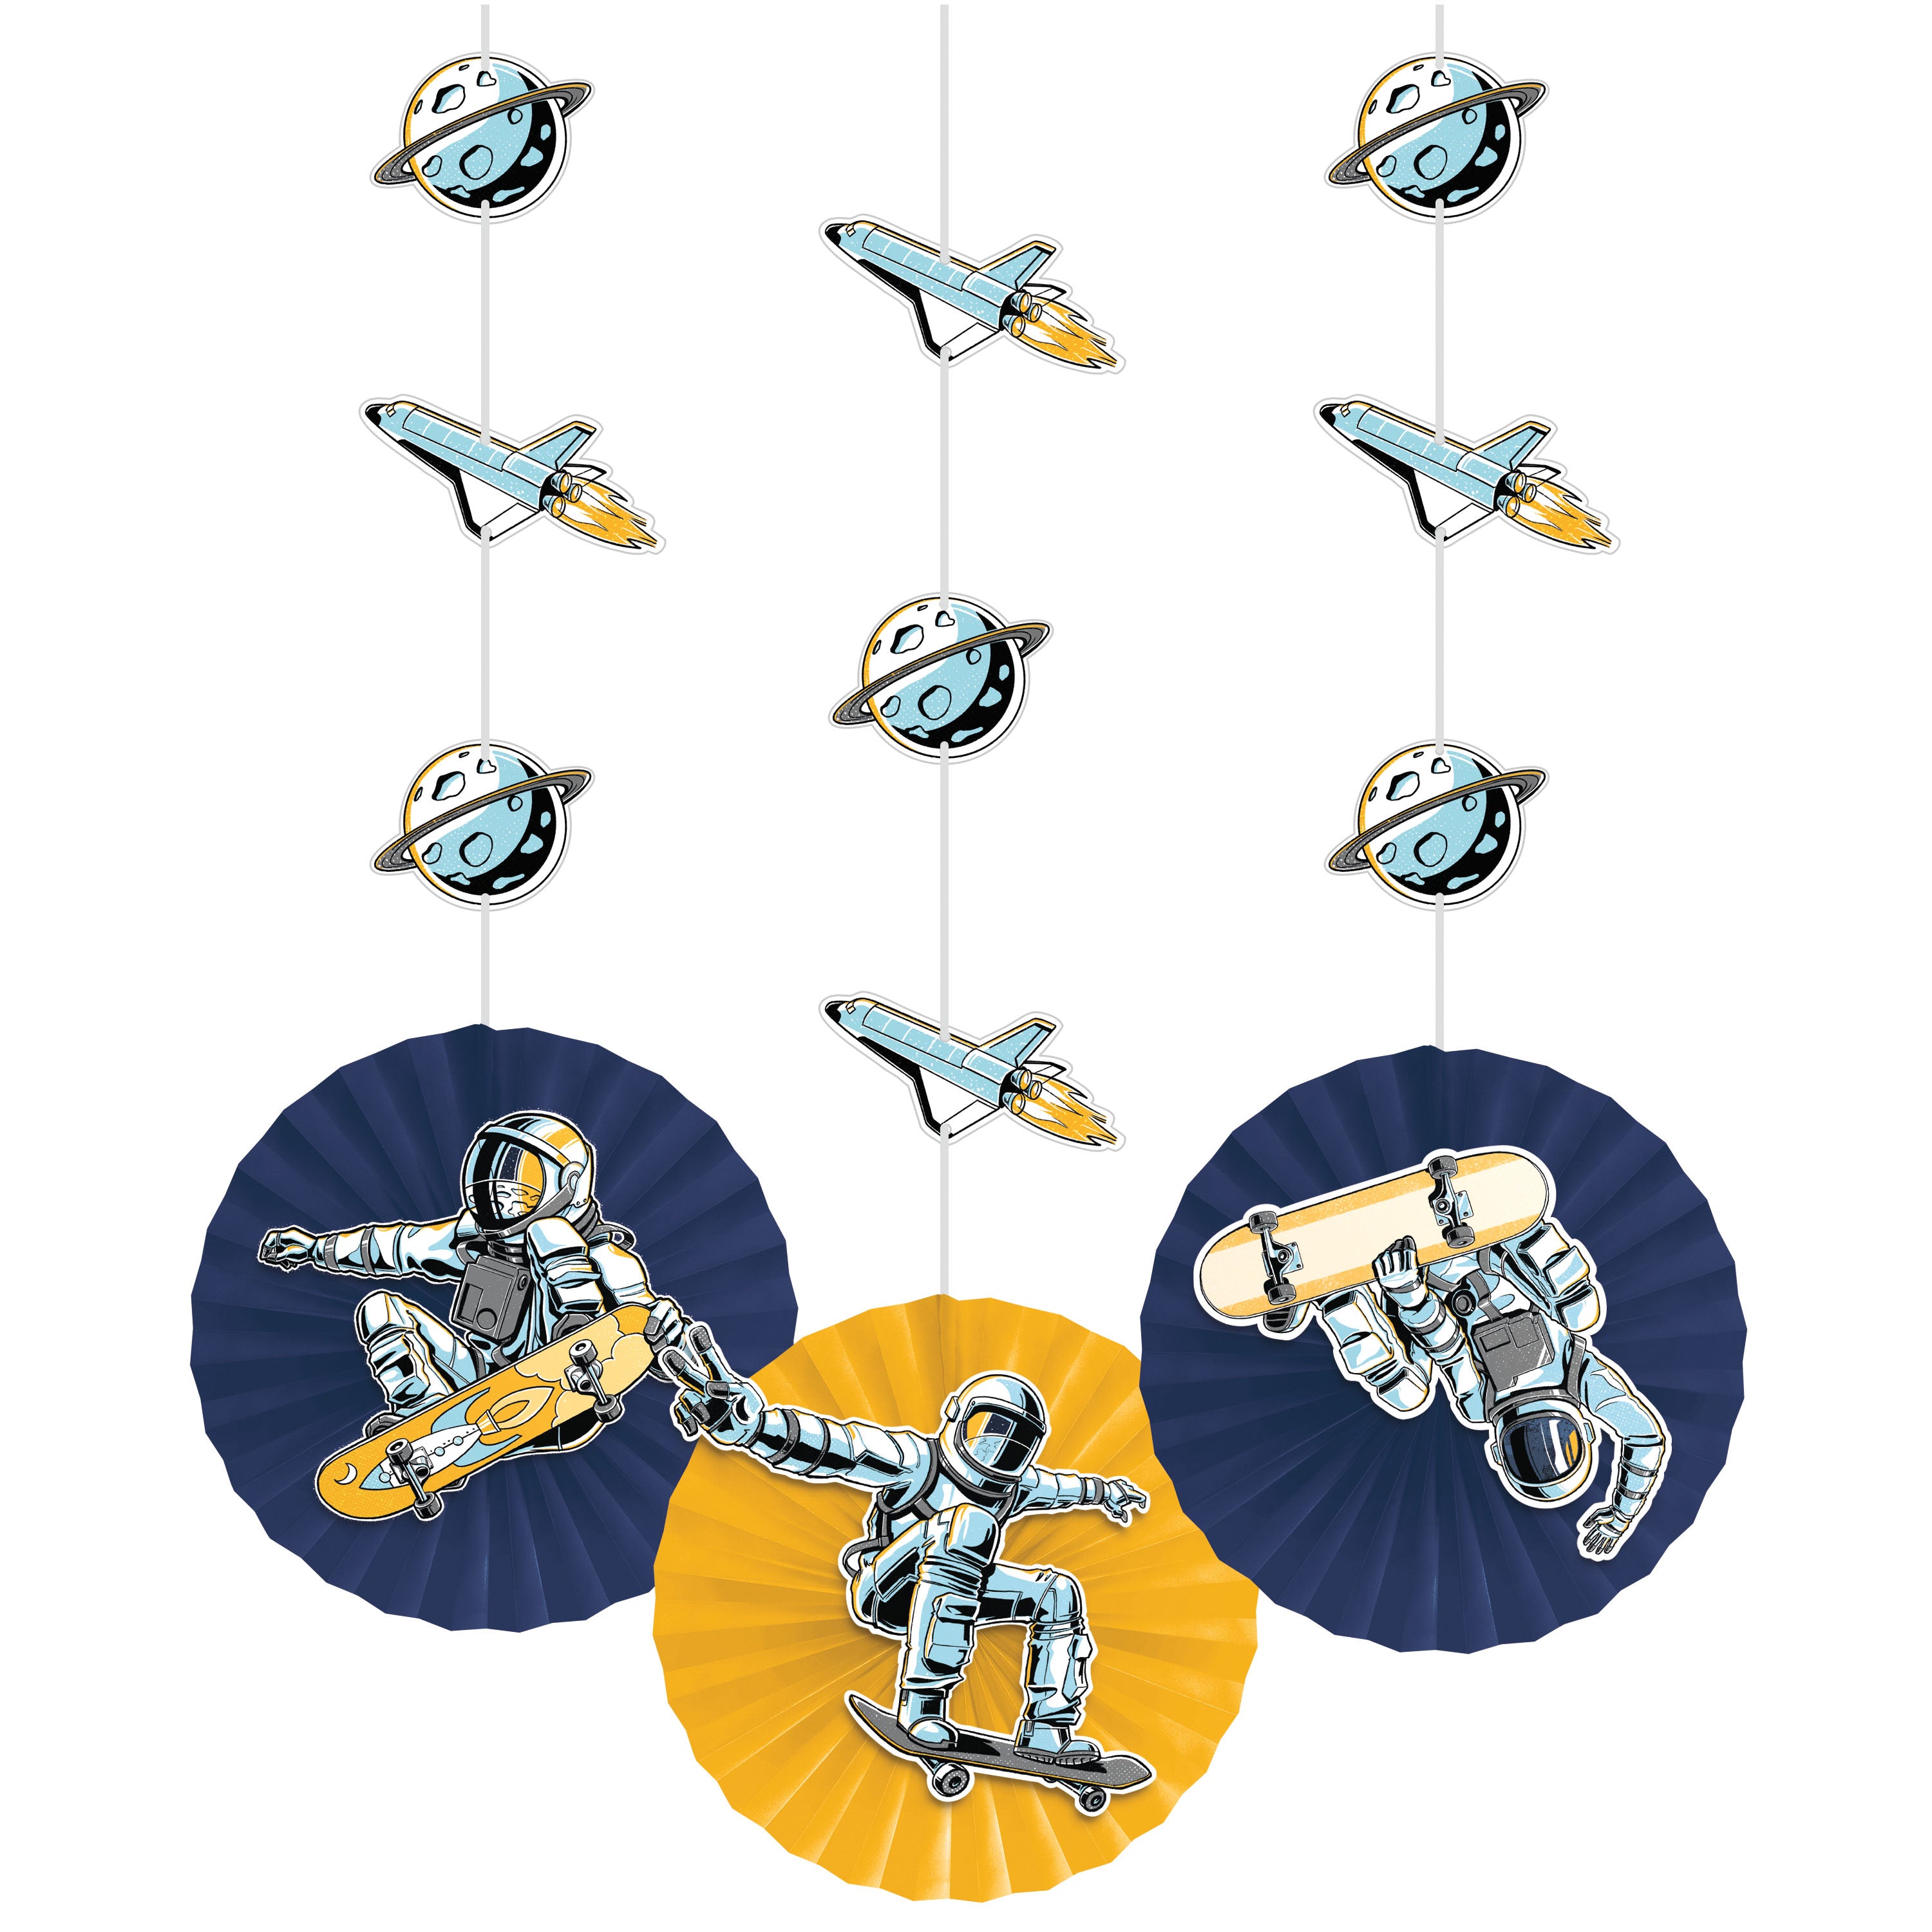 Hanging decoration cosmonaut with skate (91.4cmx20.3cm)